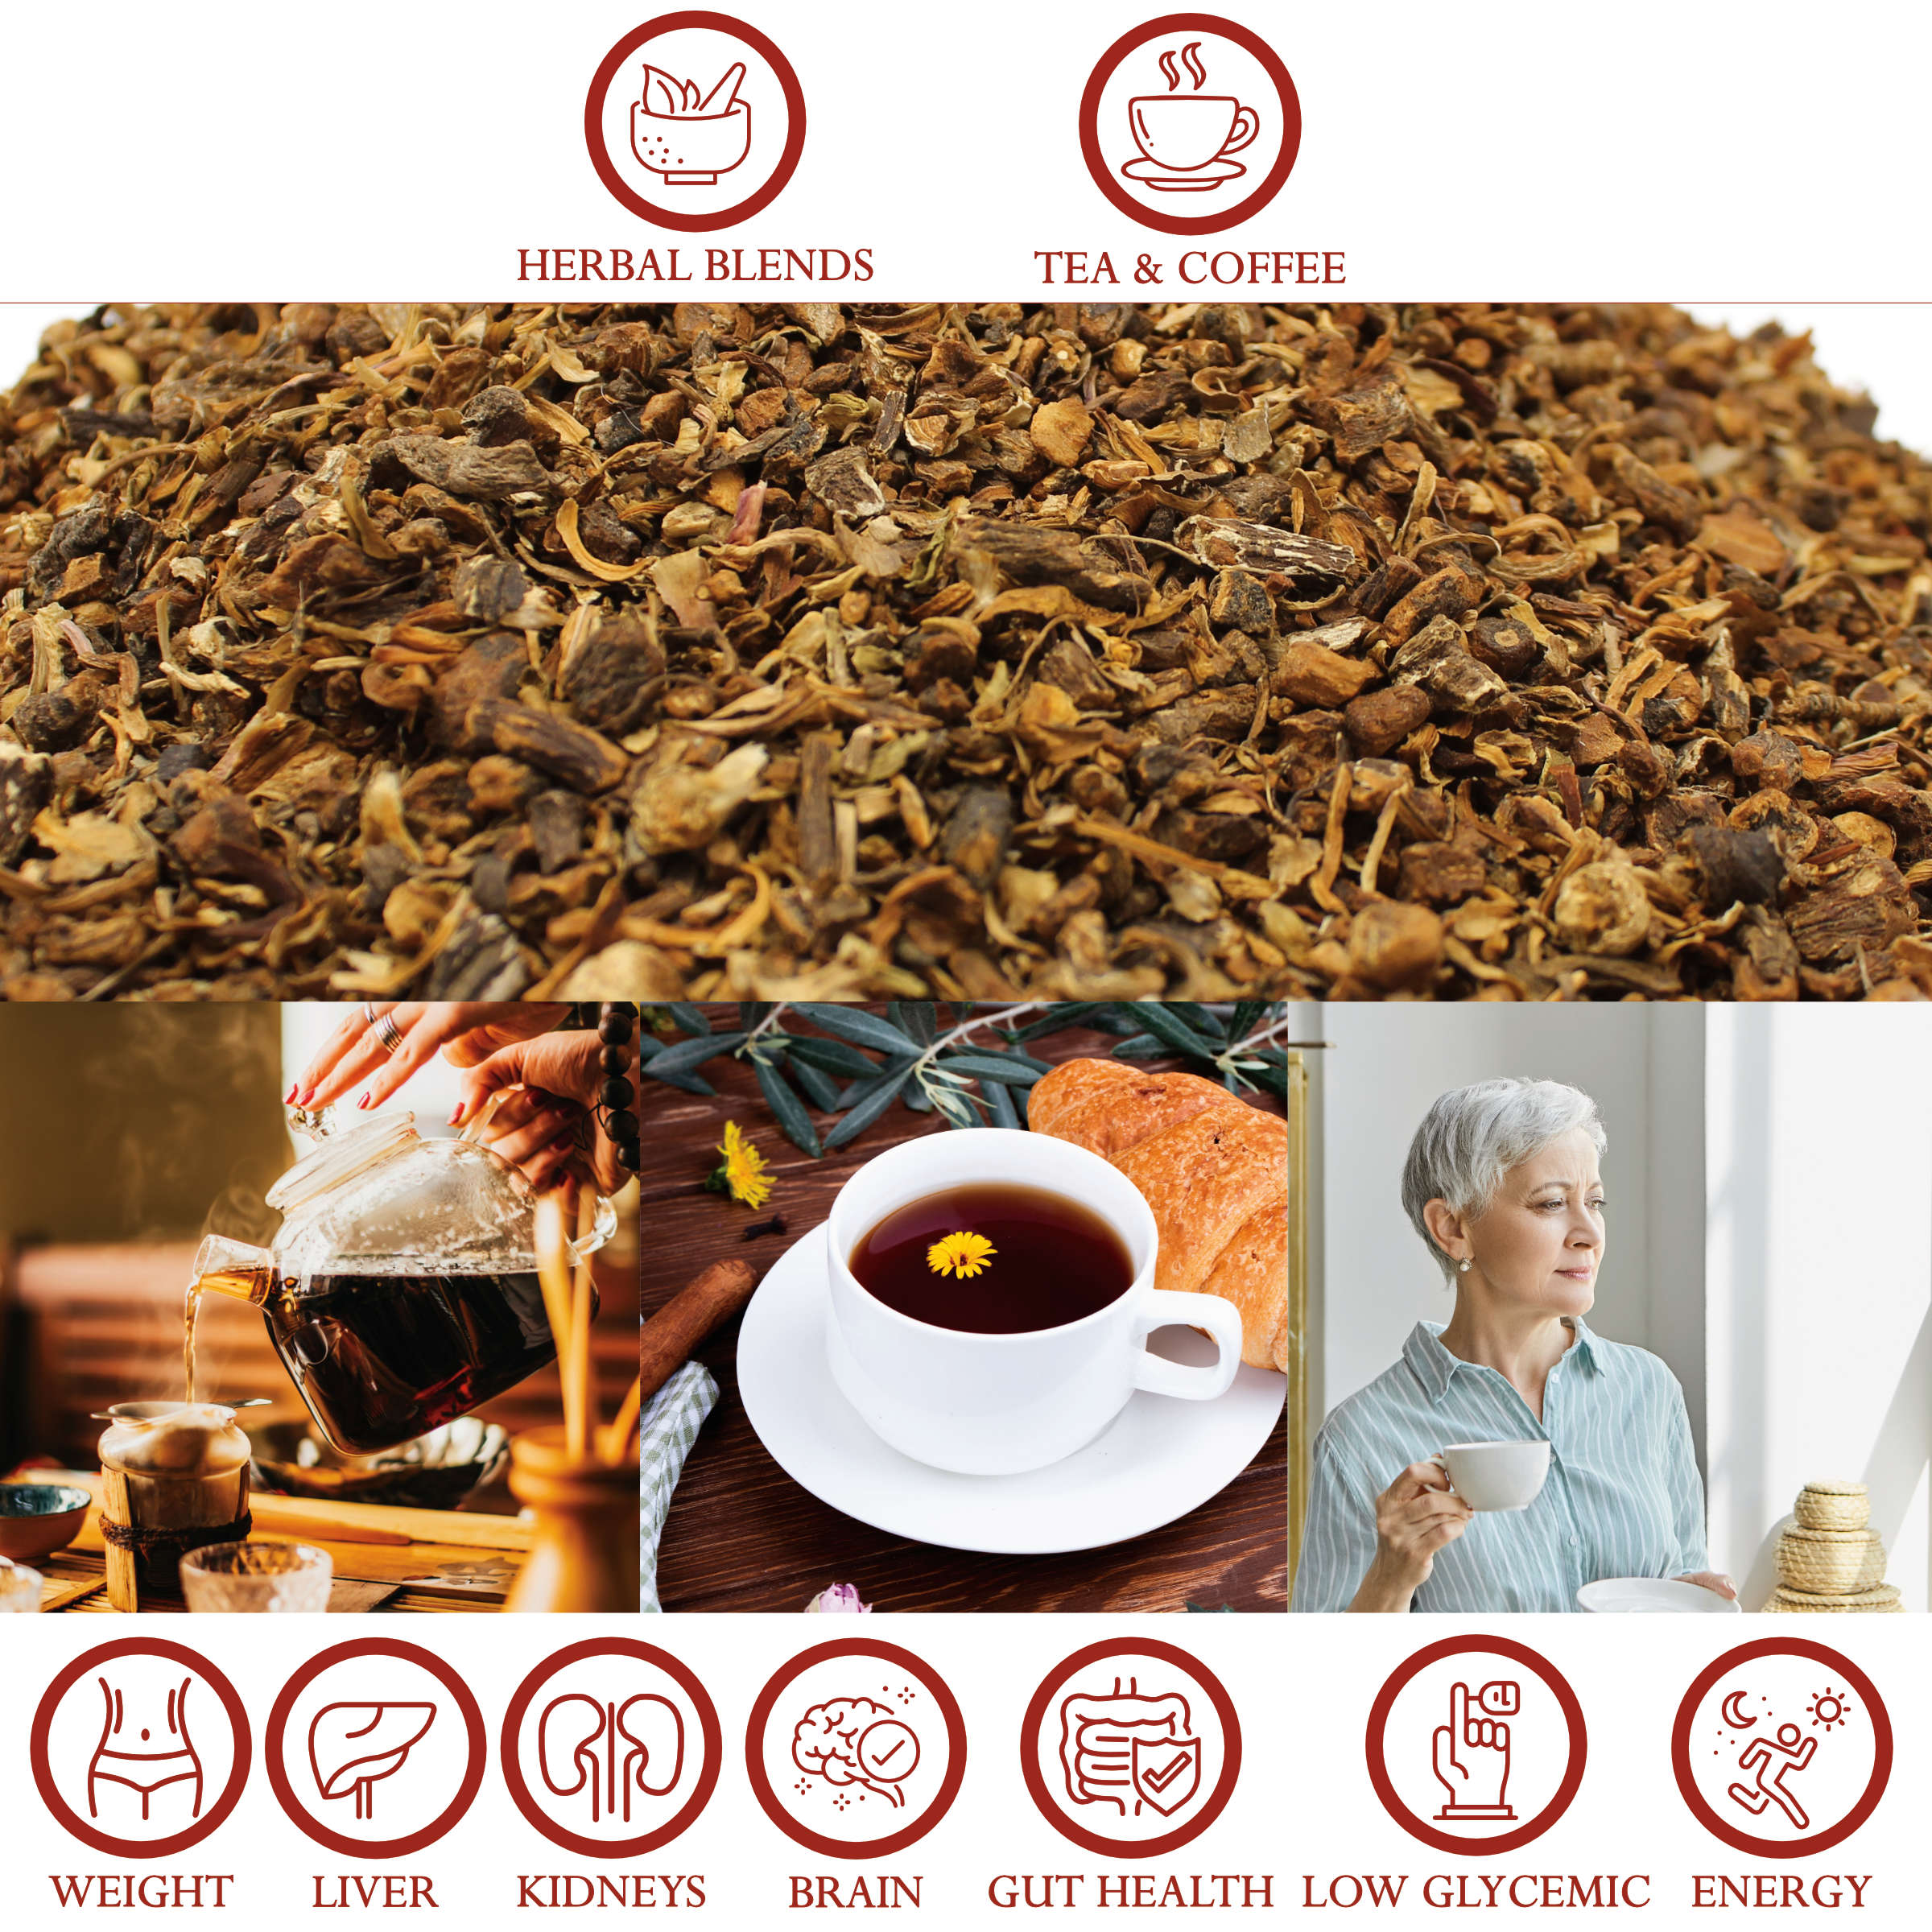 Dandelion Root Roasted Organic - Coffee Alternative, Tea